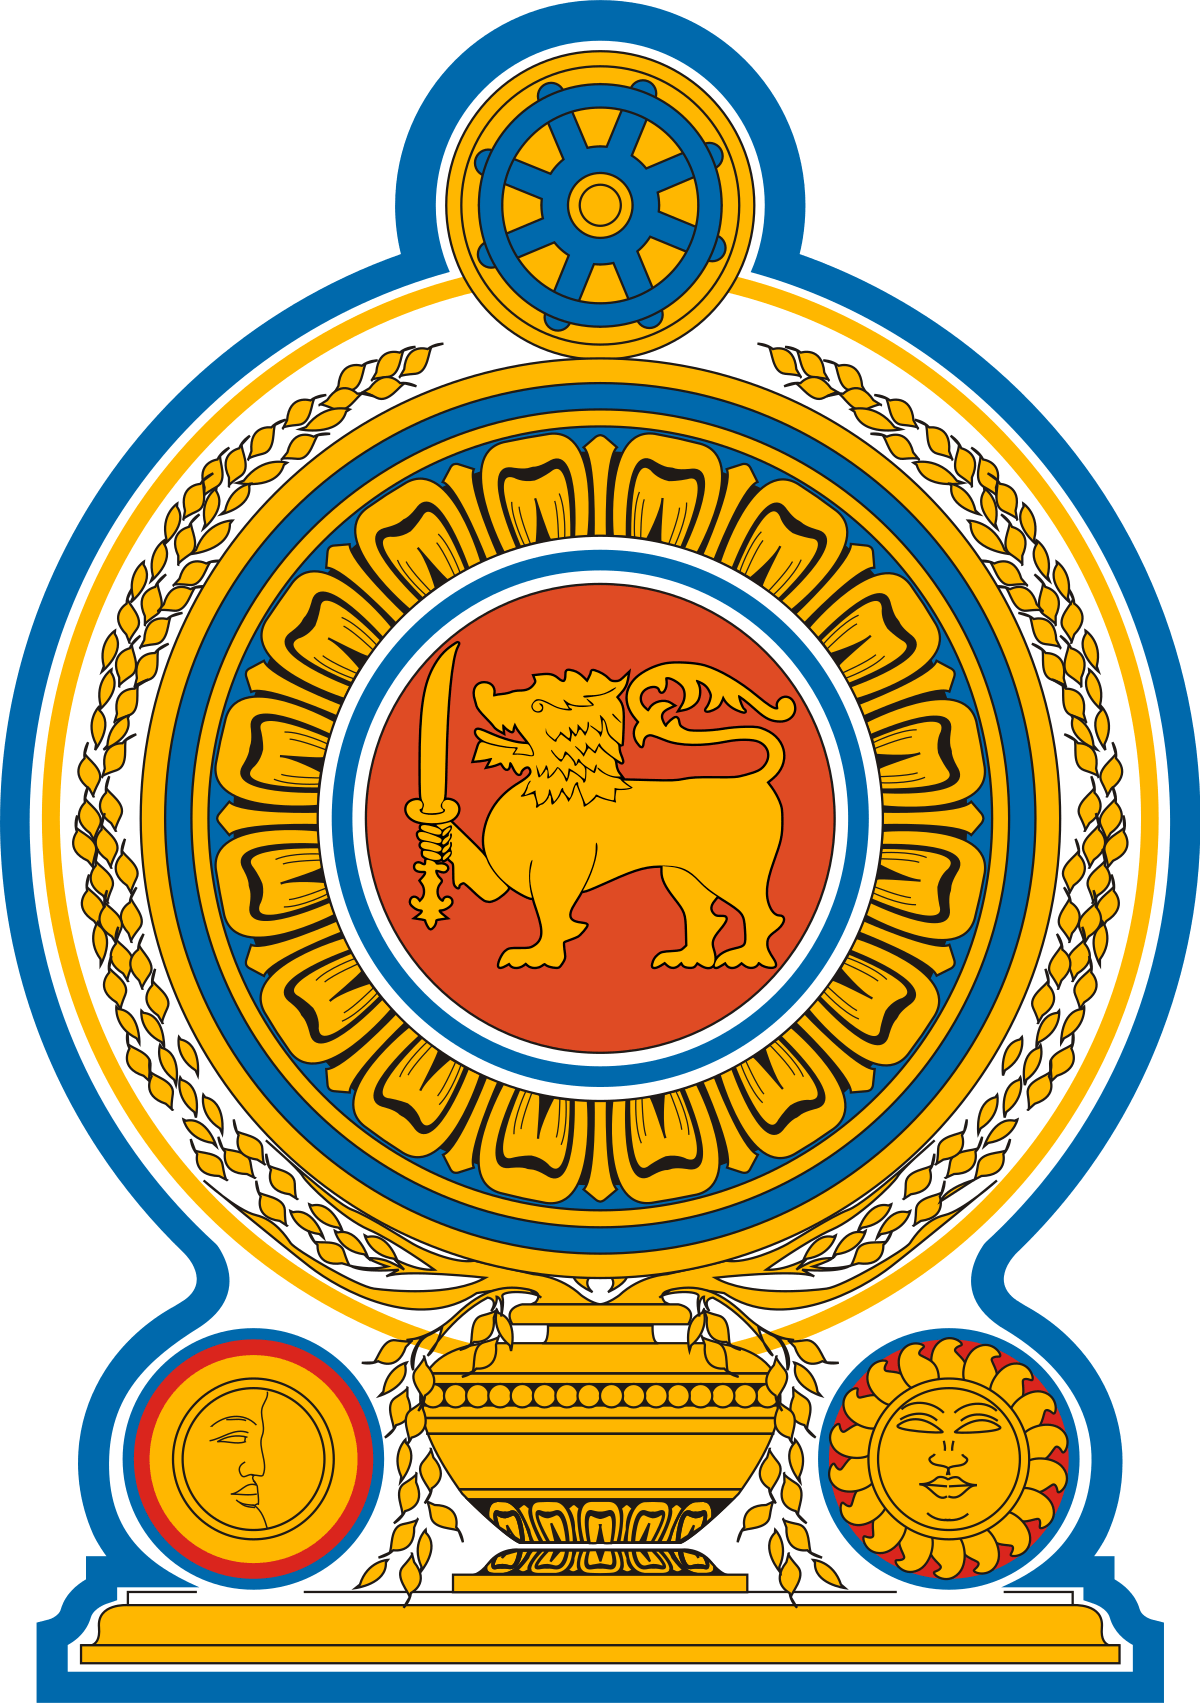 National Logo - Emblem of Sri Lanka